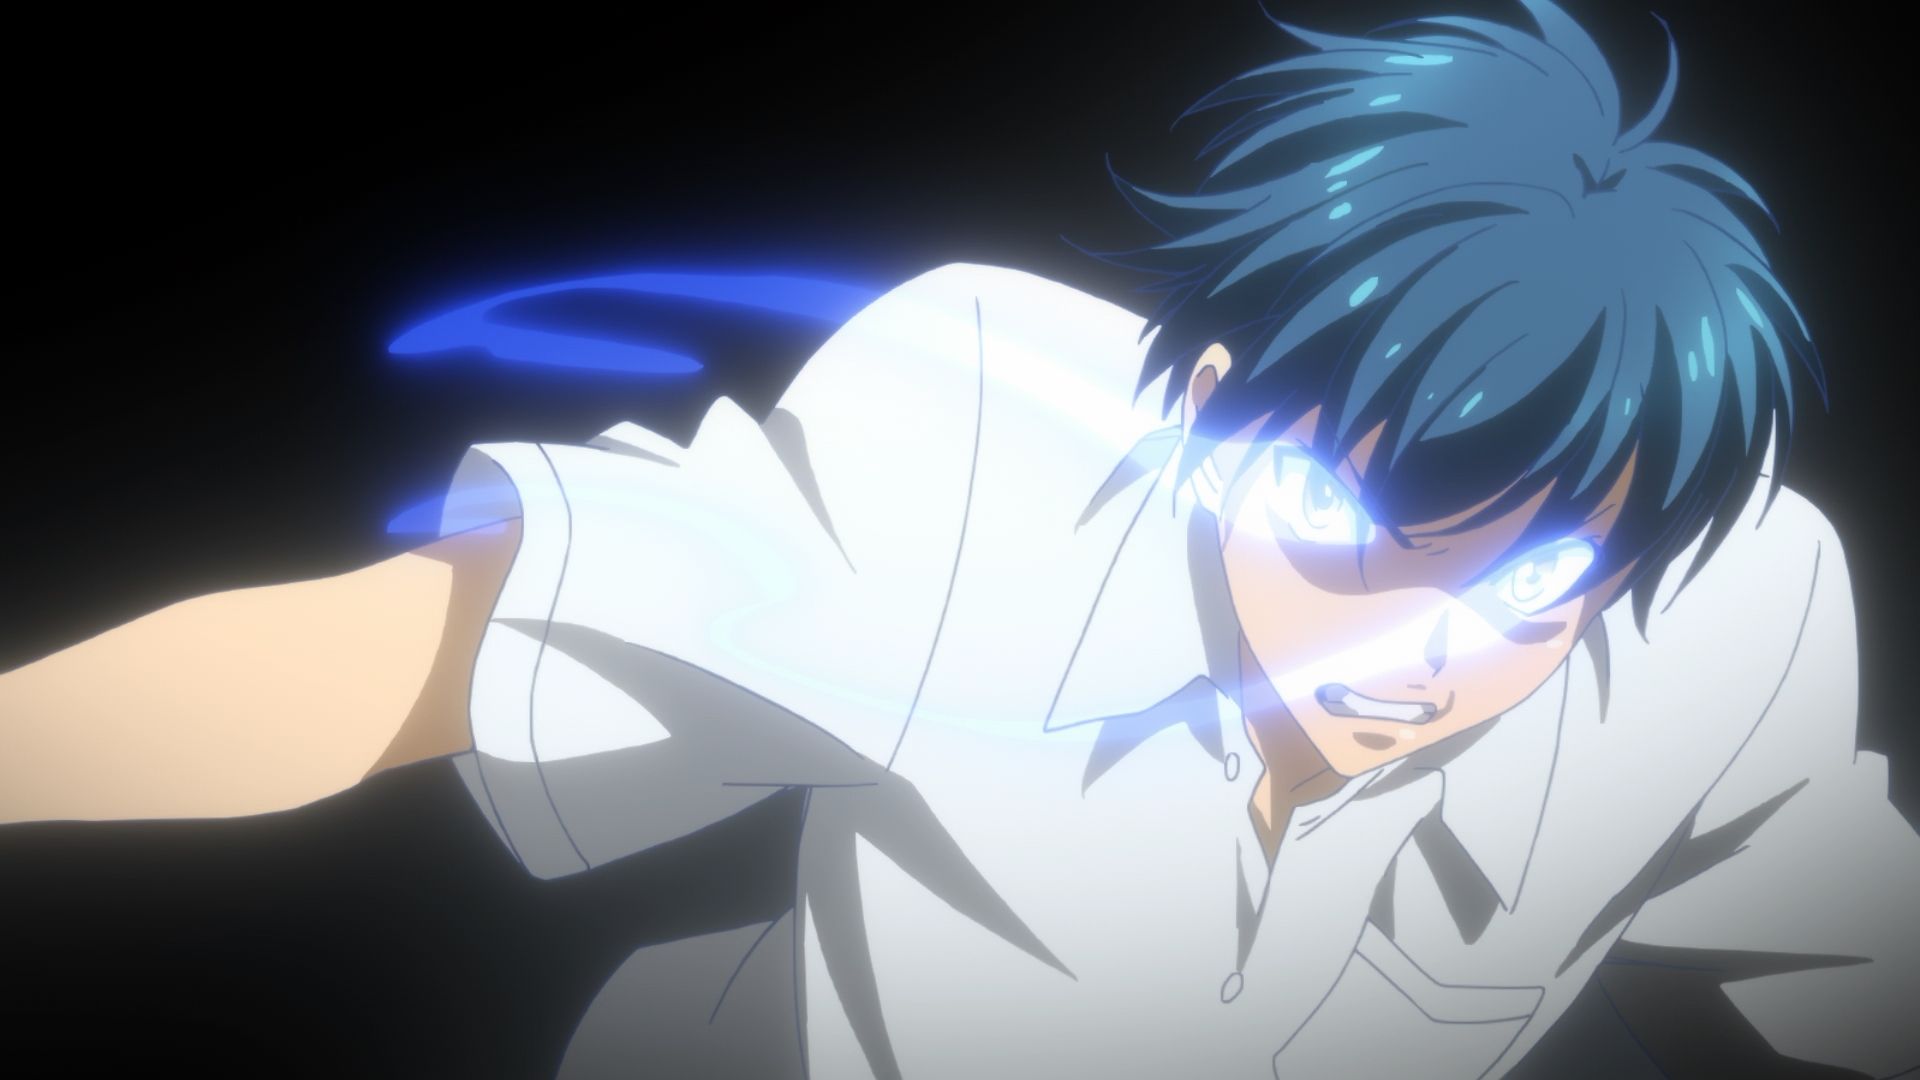 L'anime Shoot : Goal to the Future offre un aperçu de son Ending - AnimOtaku